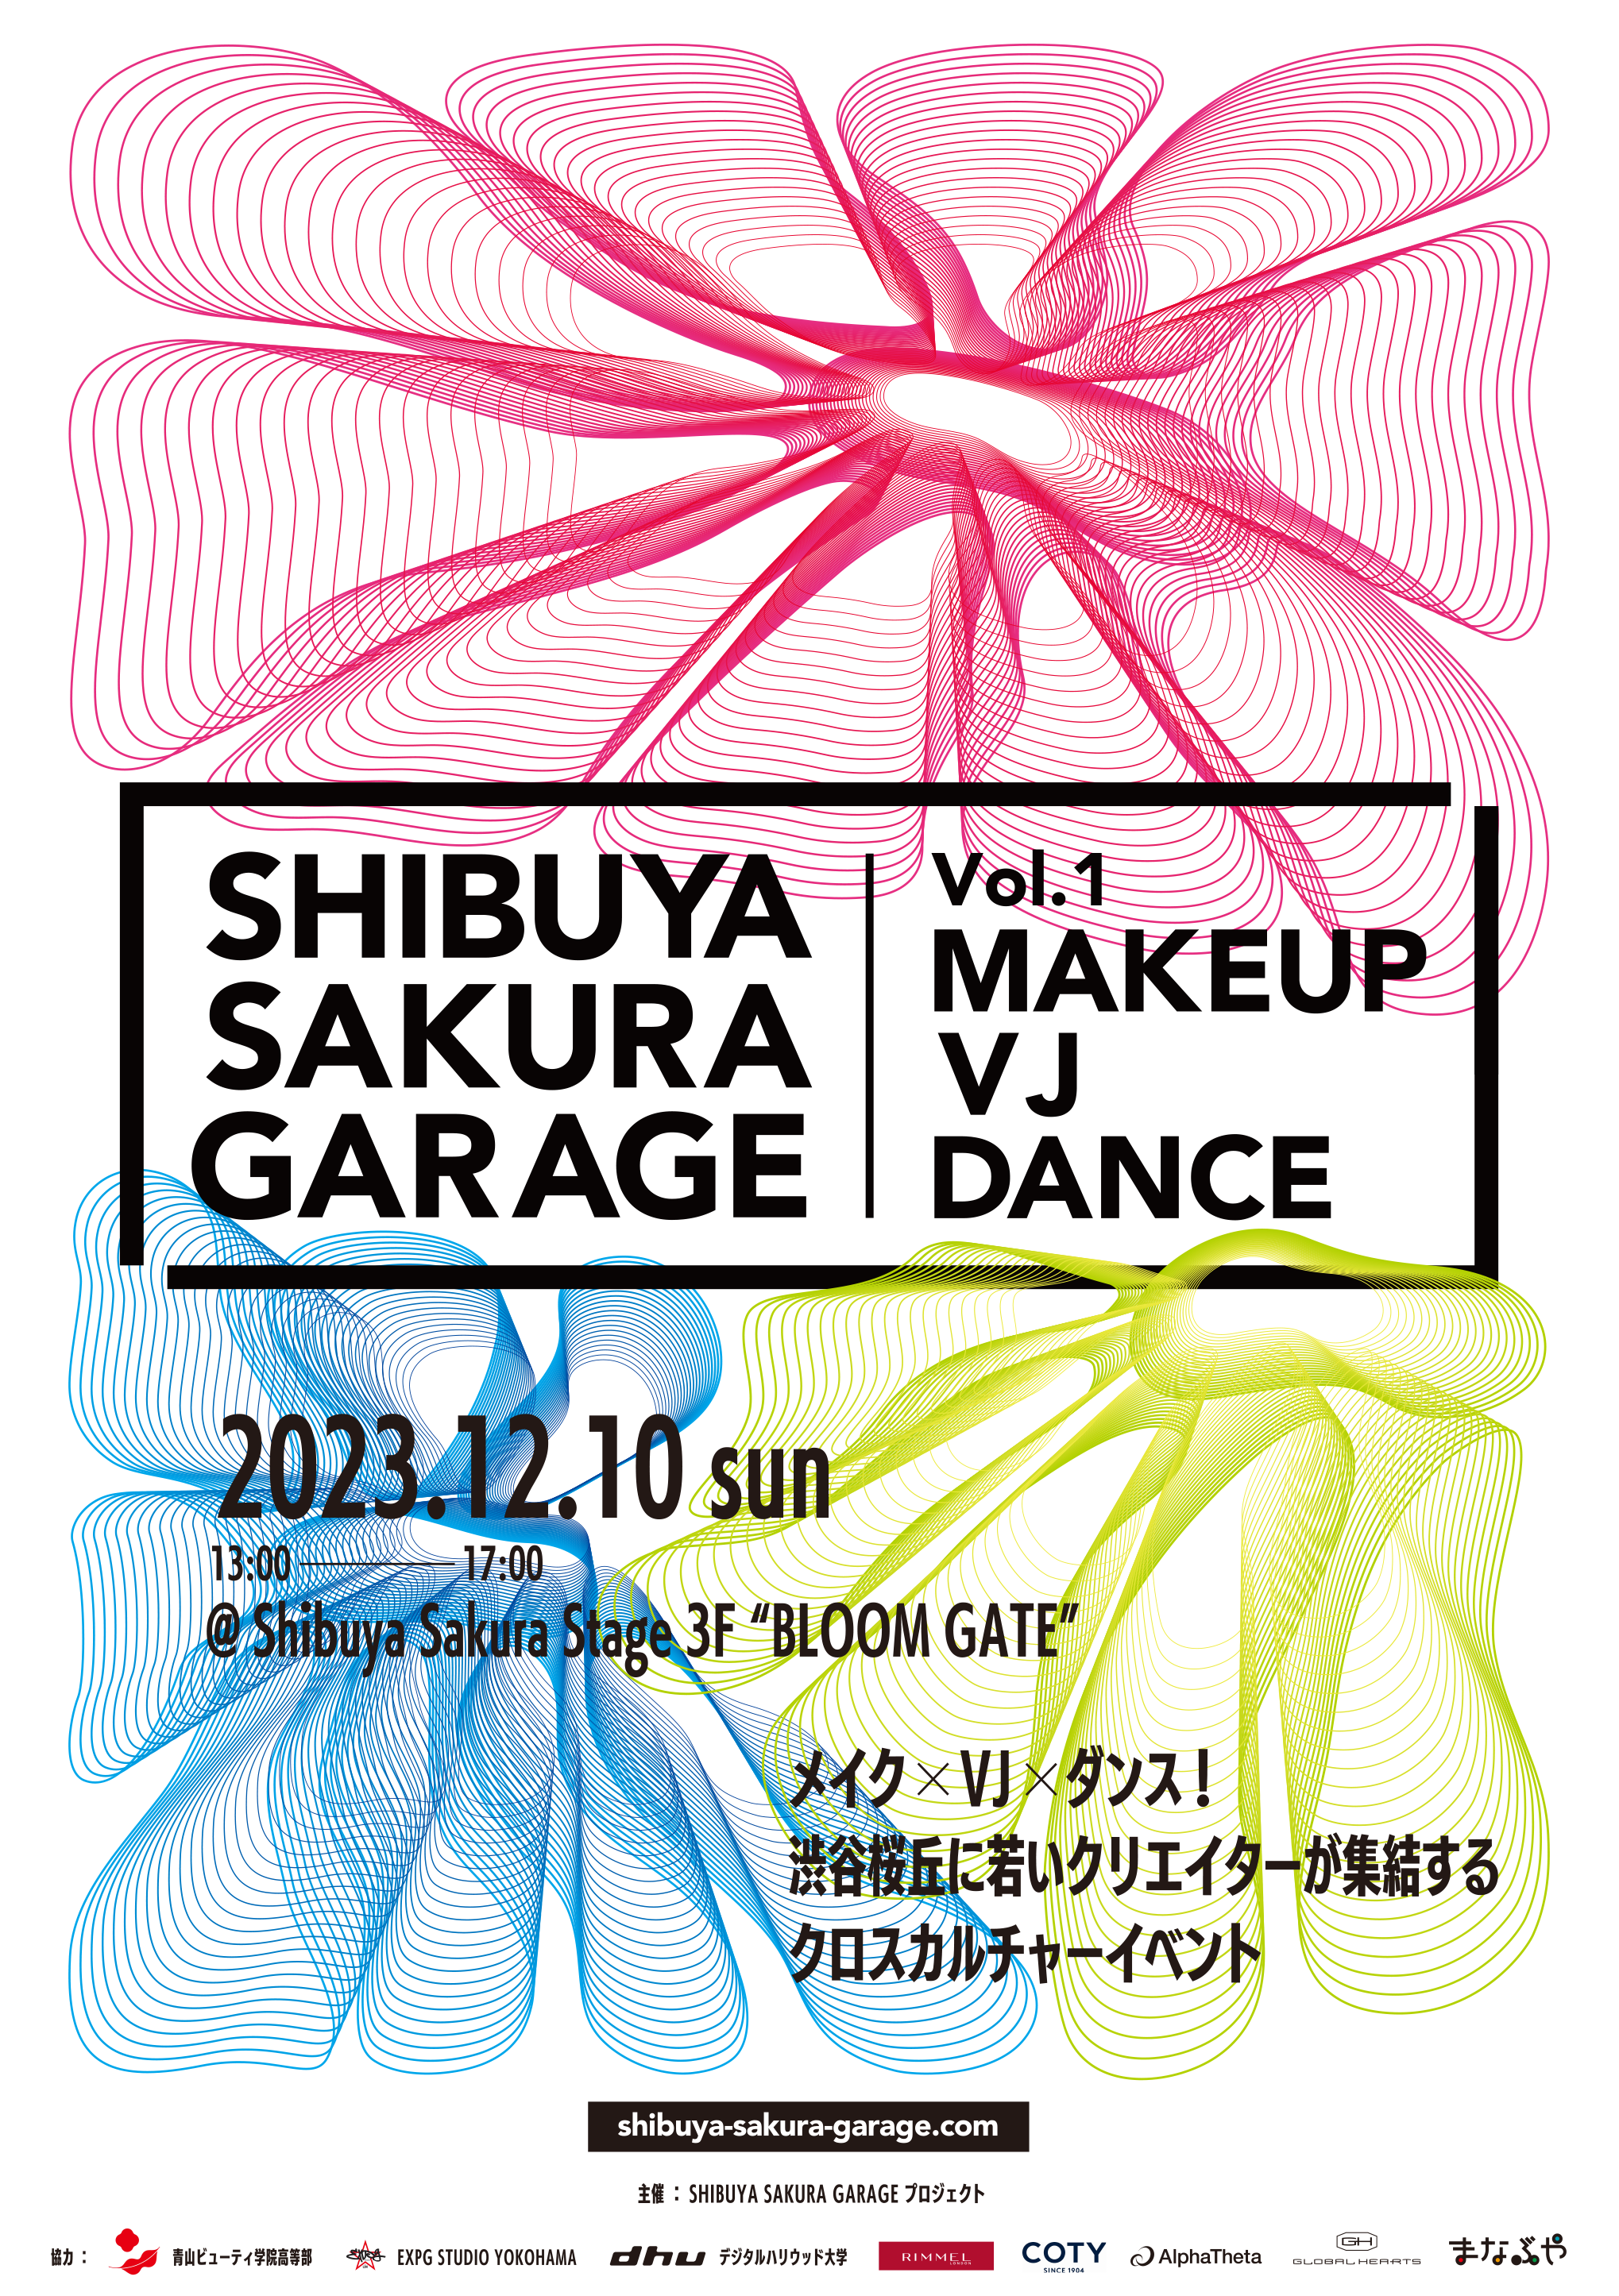 SHIBUYA SAKURA GARAGE Vol.1 MAKEUP/VJ/DANCE